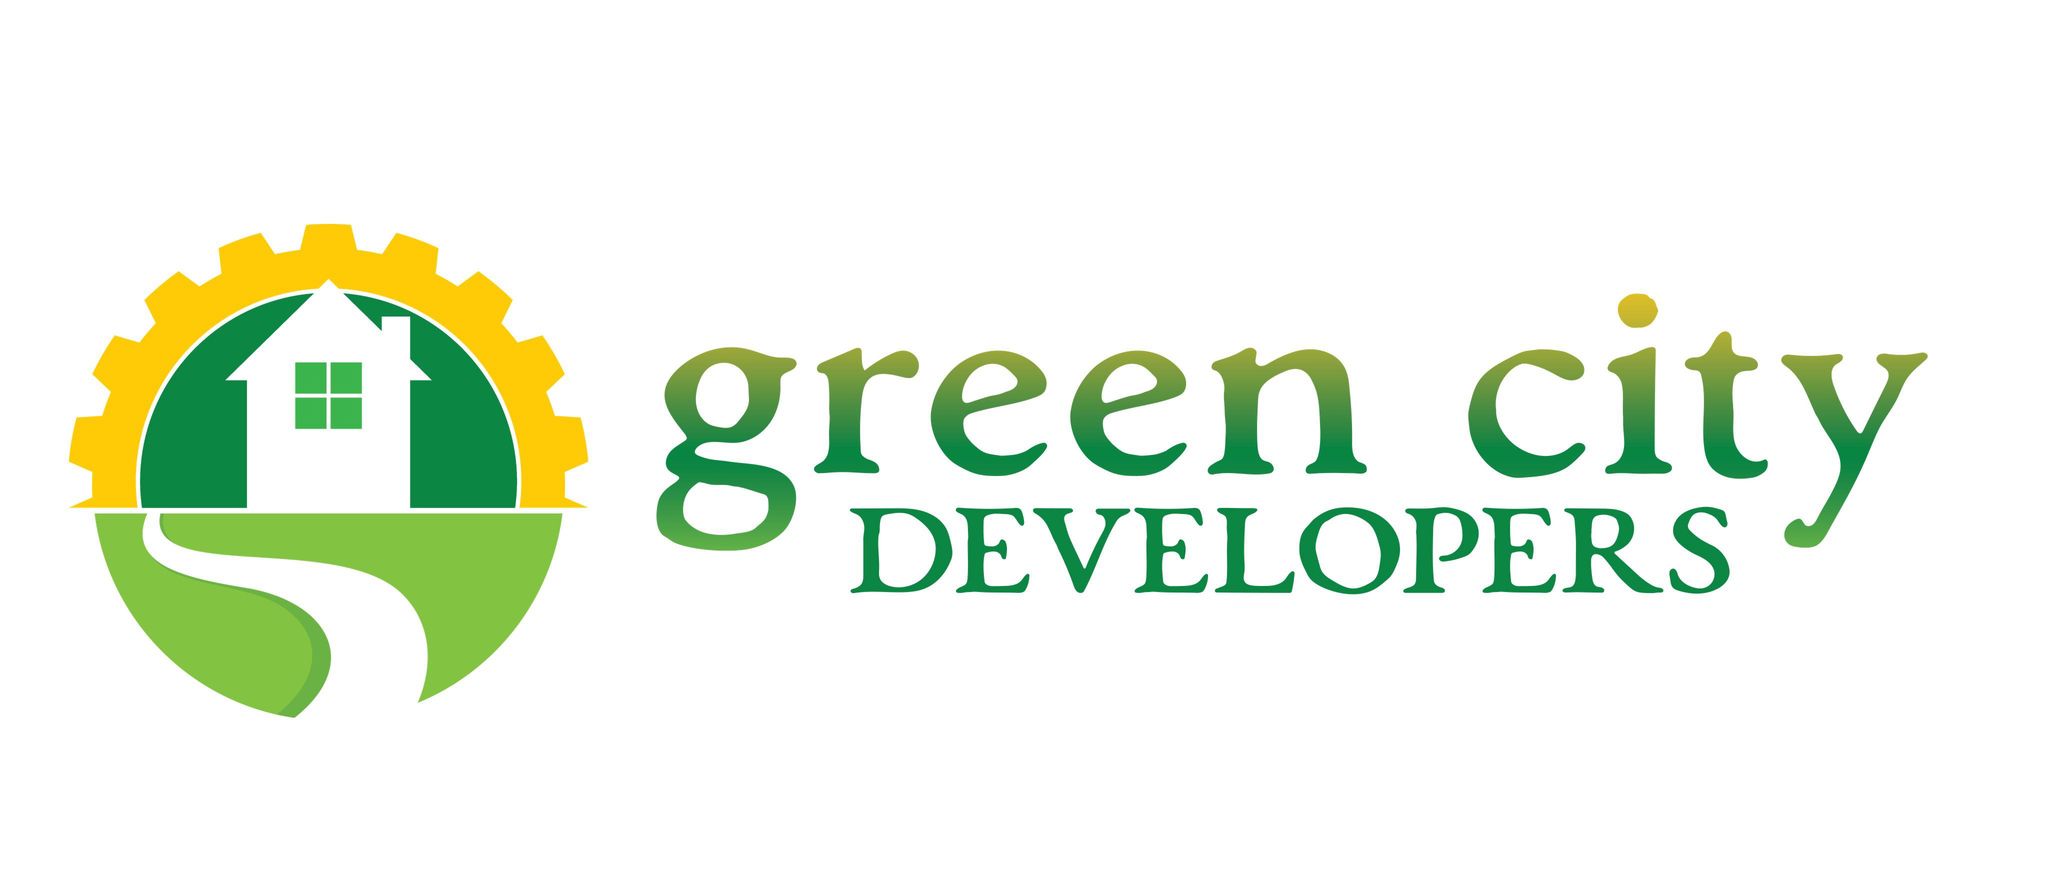 Green City Developer